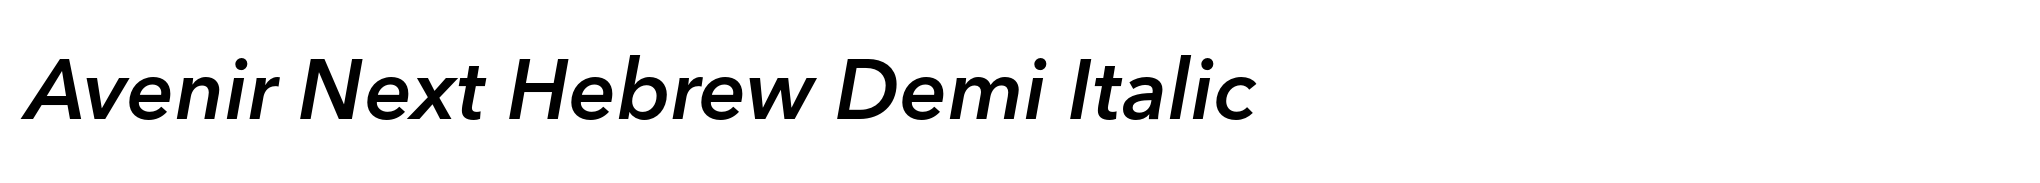 Avenir Next Hebrew Demi Italic image